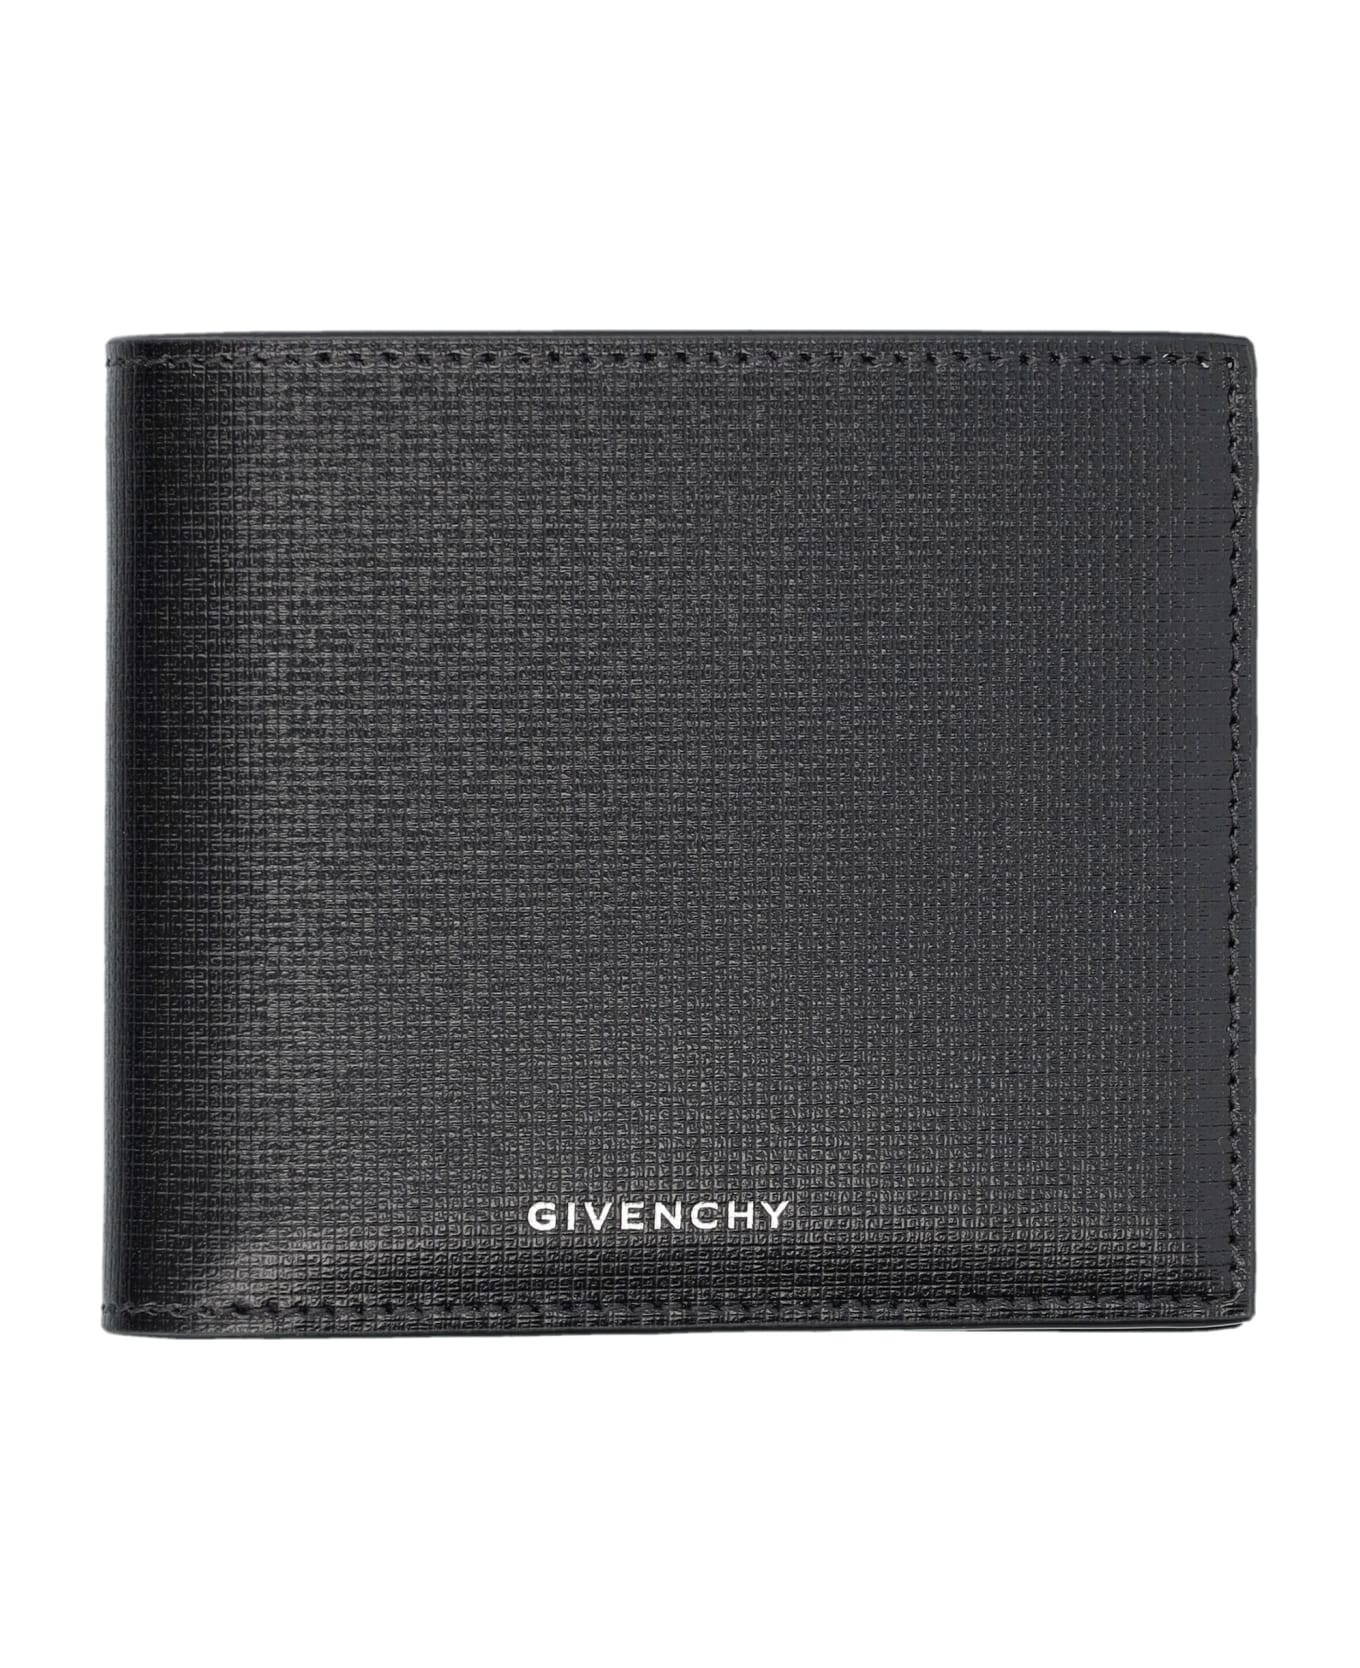 Givenchy 8cc Billfold Wallet - BLACK